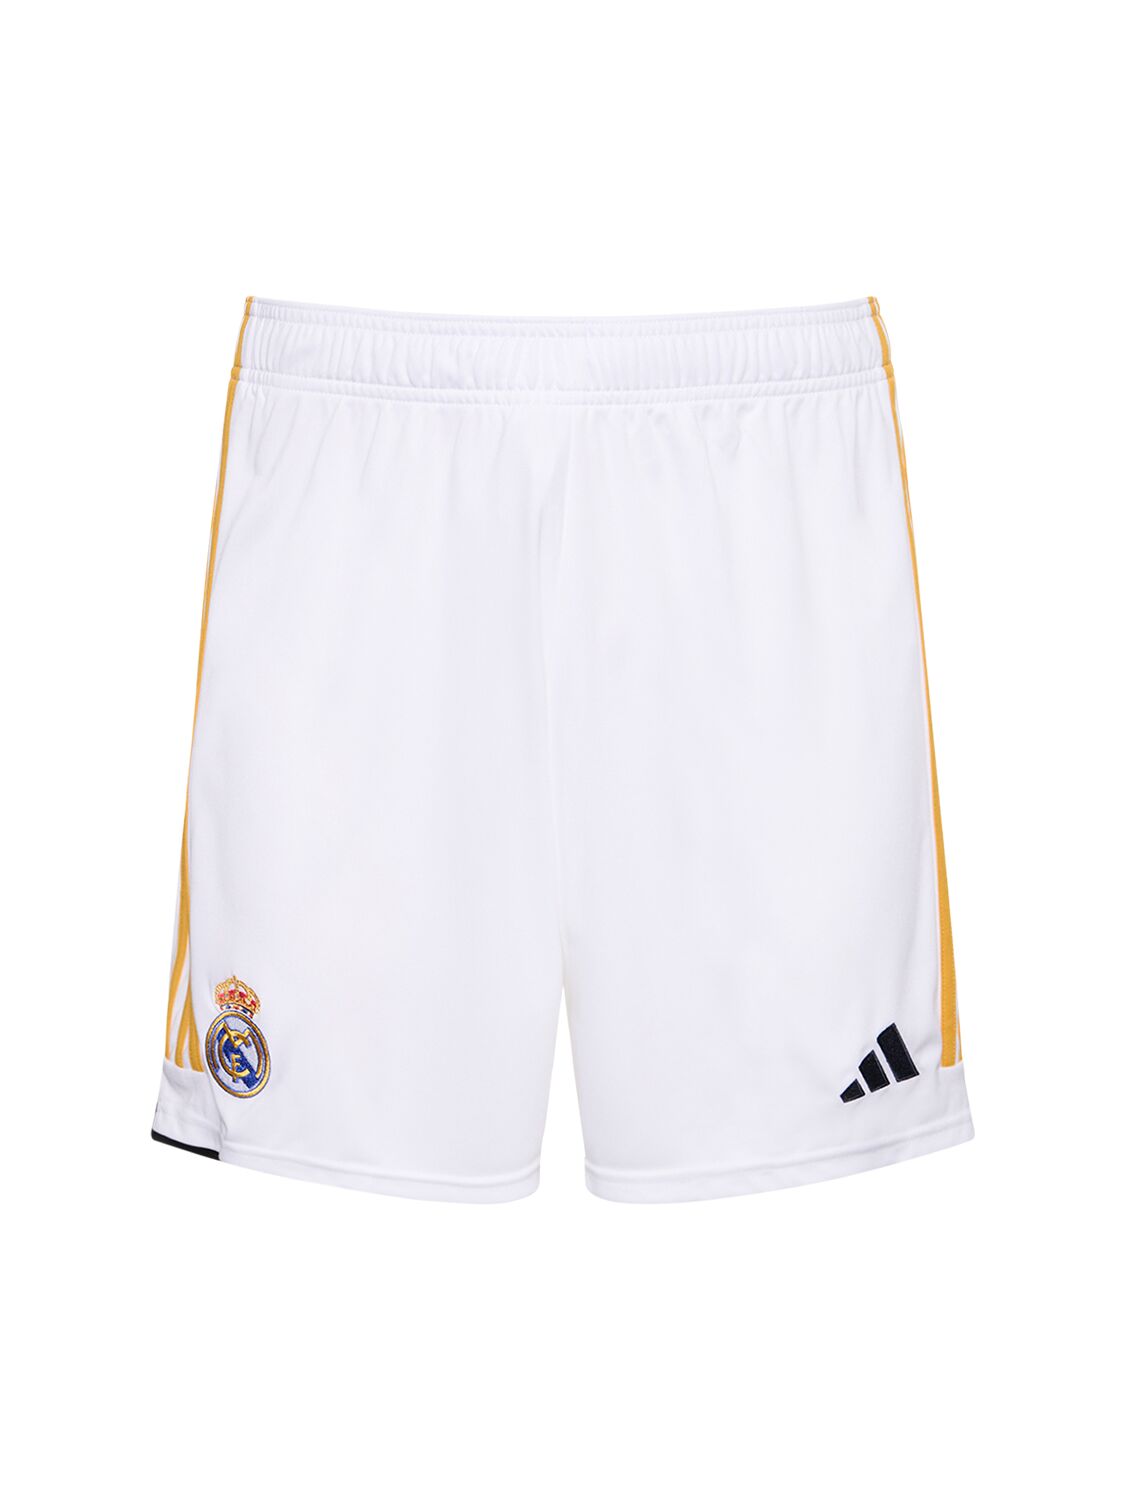 Shorts Real Madrid - ADIDAS PERFORMANCE - Modalova